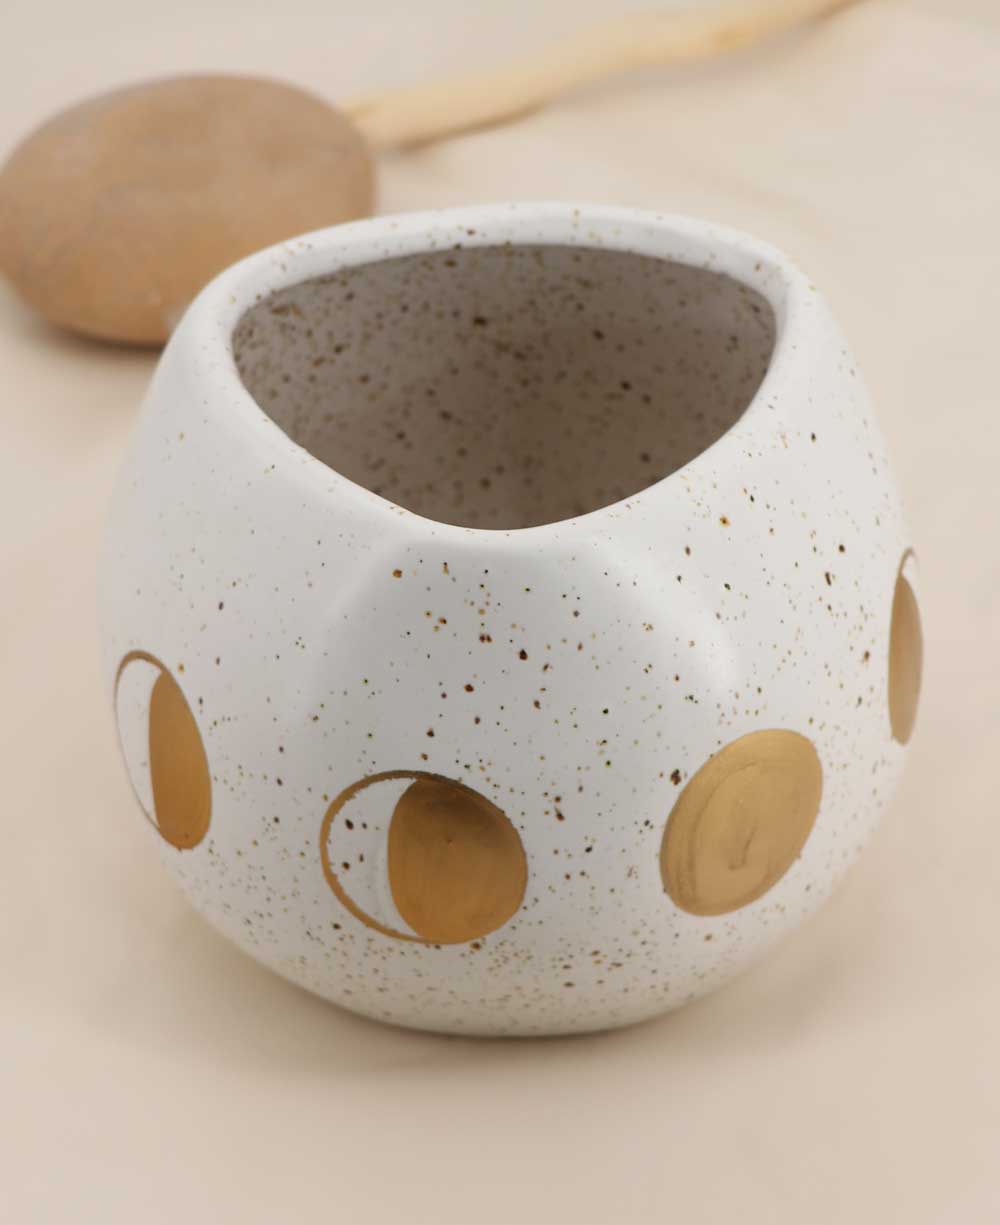 Moon Phase Celestial Design Vase or Pot Planters - Pots & Planters Small